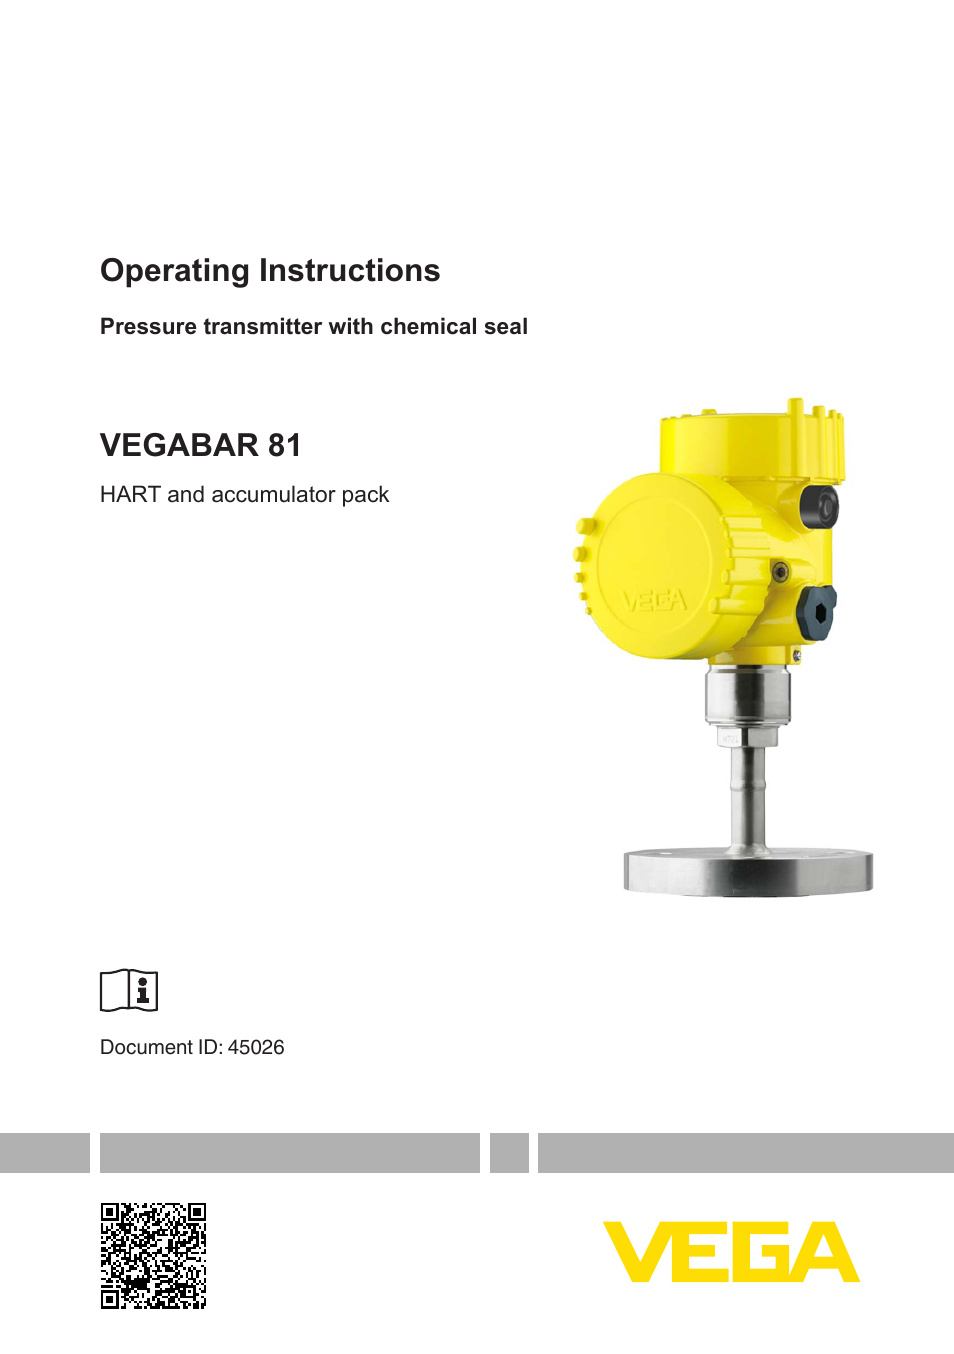 VEGABAR 81 HART and accumulator pack - Operating Instructions